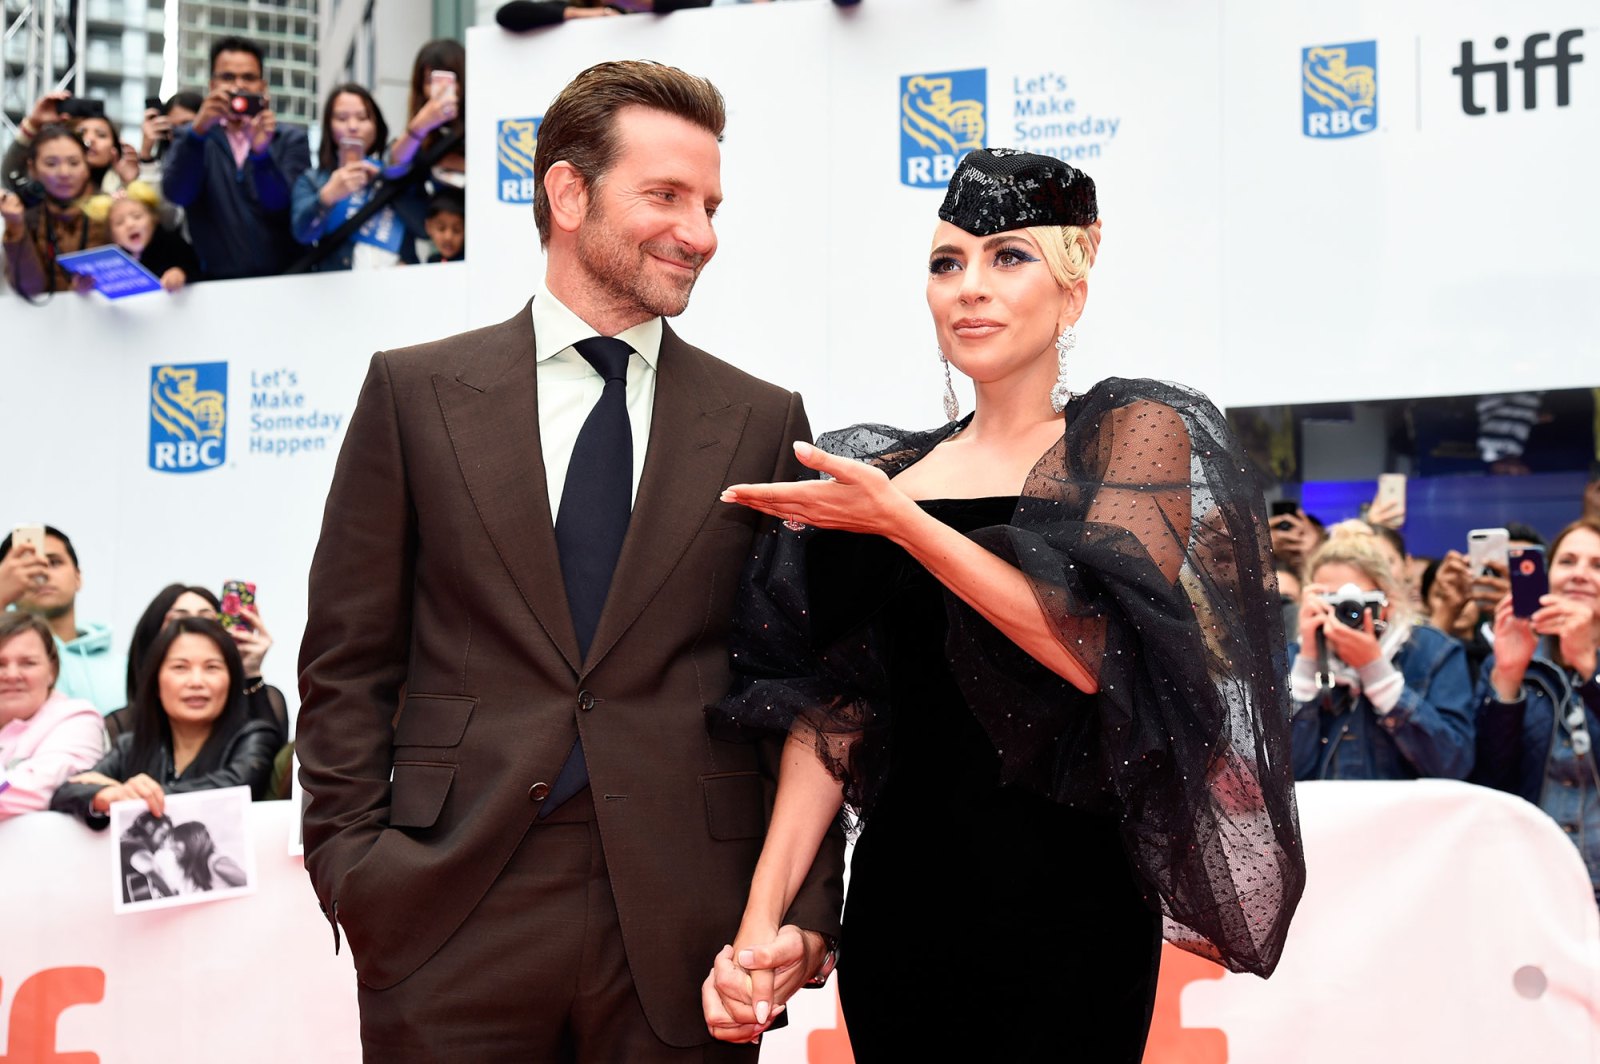 Bradley Cooper (L) and Lady Gaga